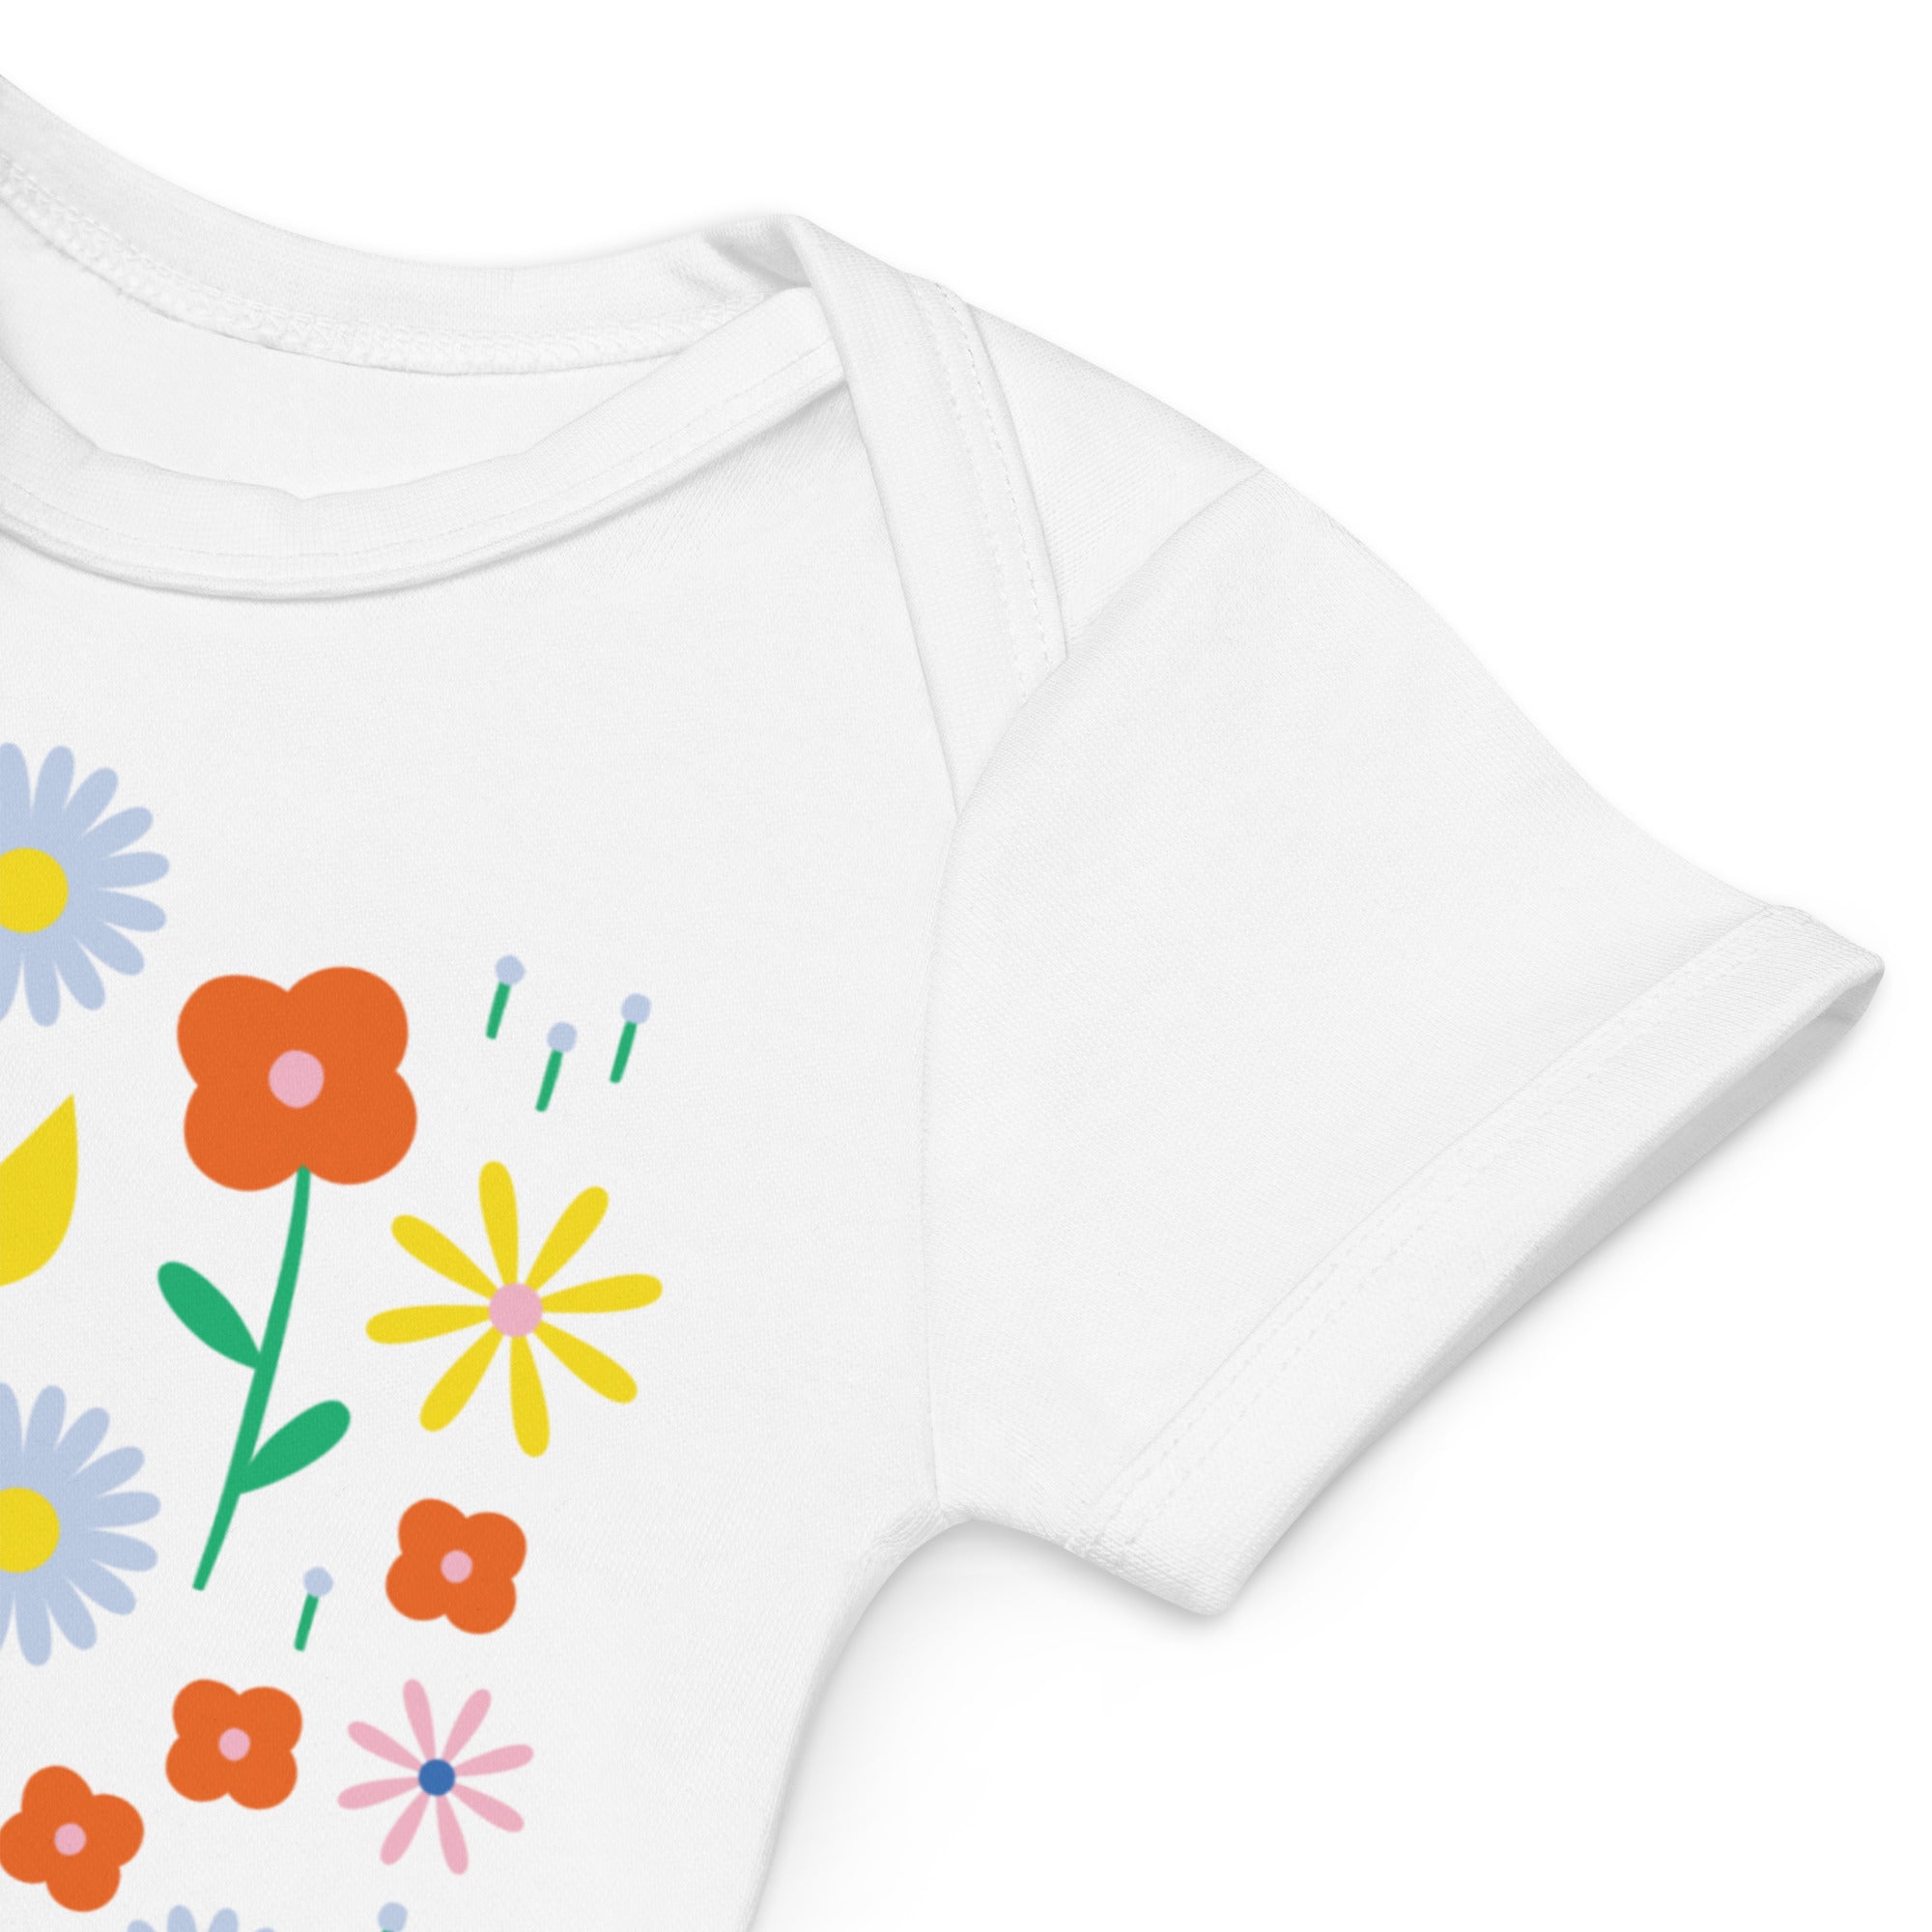 Happy Fleurs Organic Cotton Short Sleeve Baby Onesie